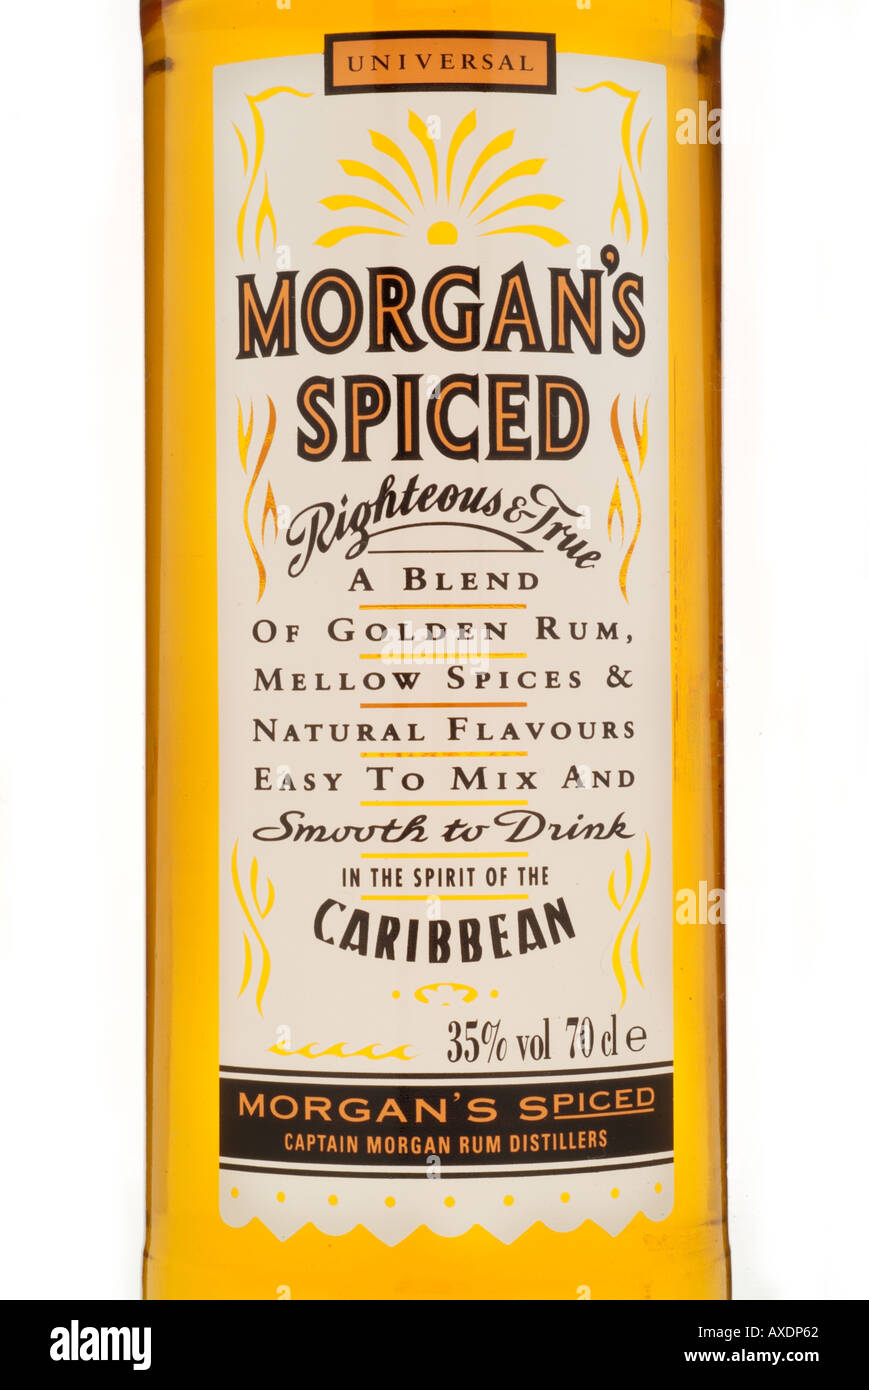 universal morgan morgan's spiced spice righteous true golden rum caribbean captain Stock Photo